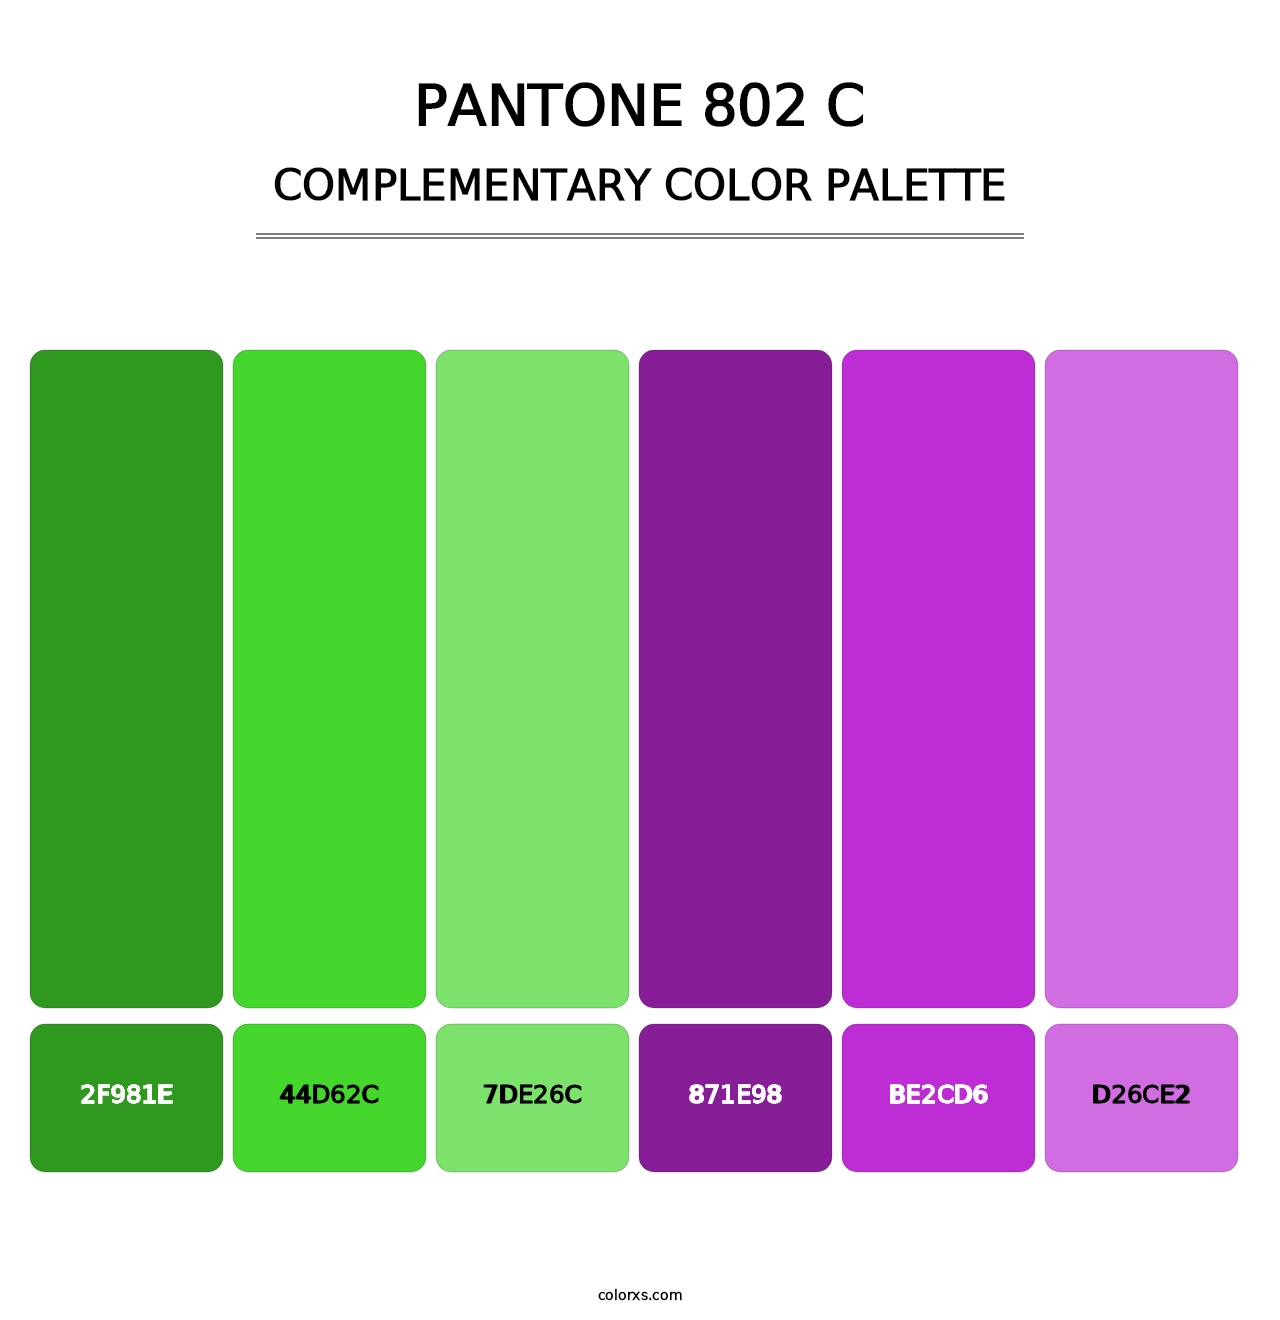 PANTONE 802 C - Complementary Color Palette